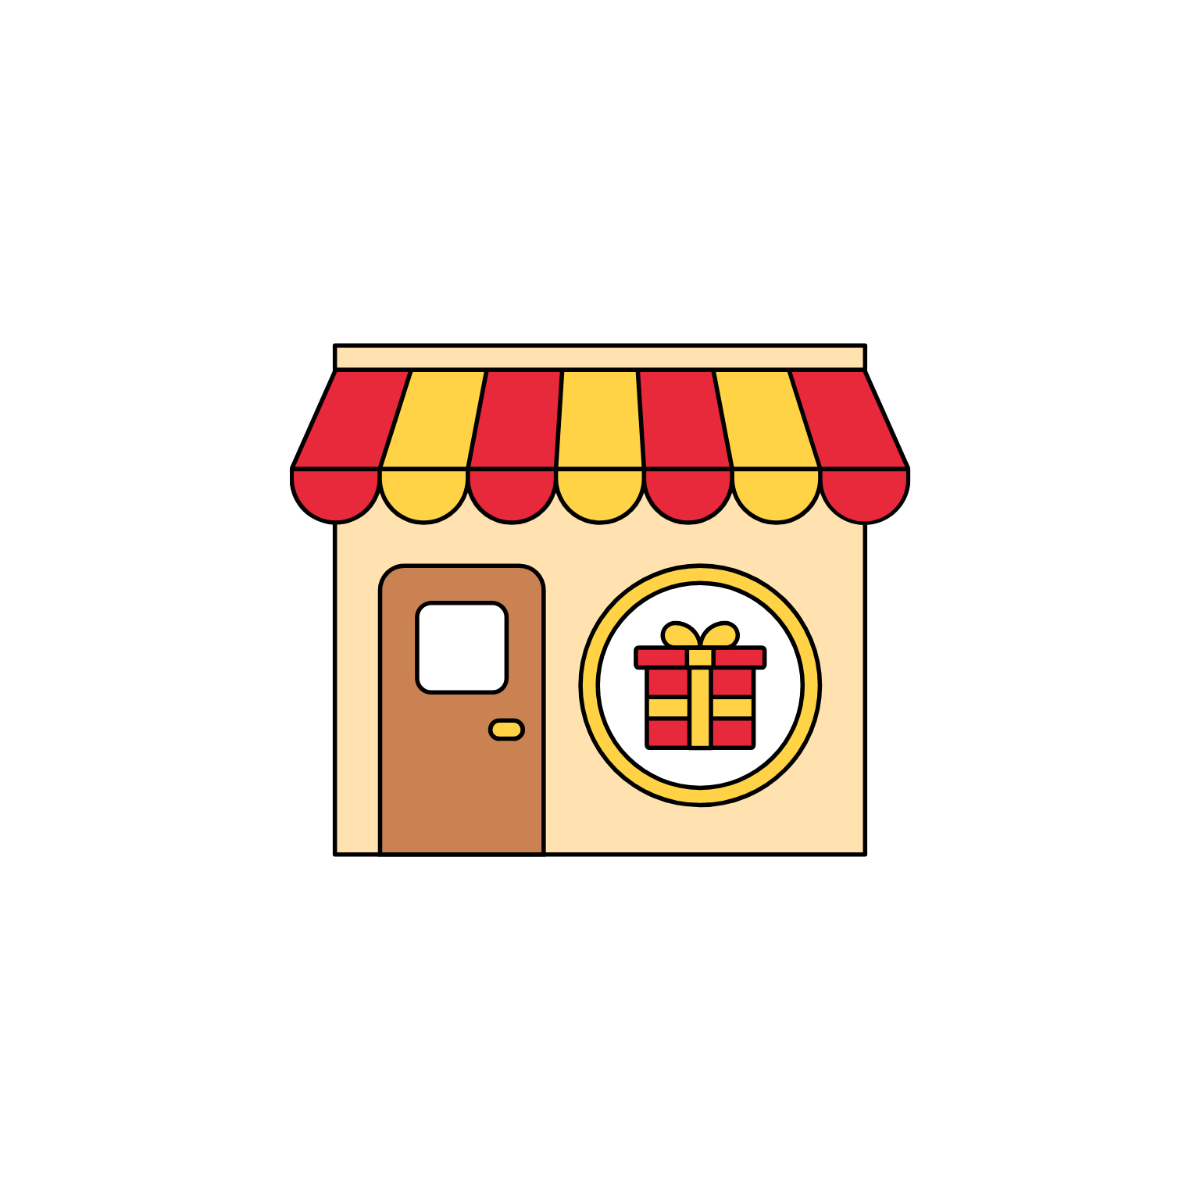 Gift Shop Icon